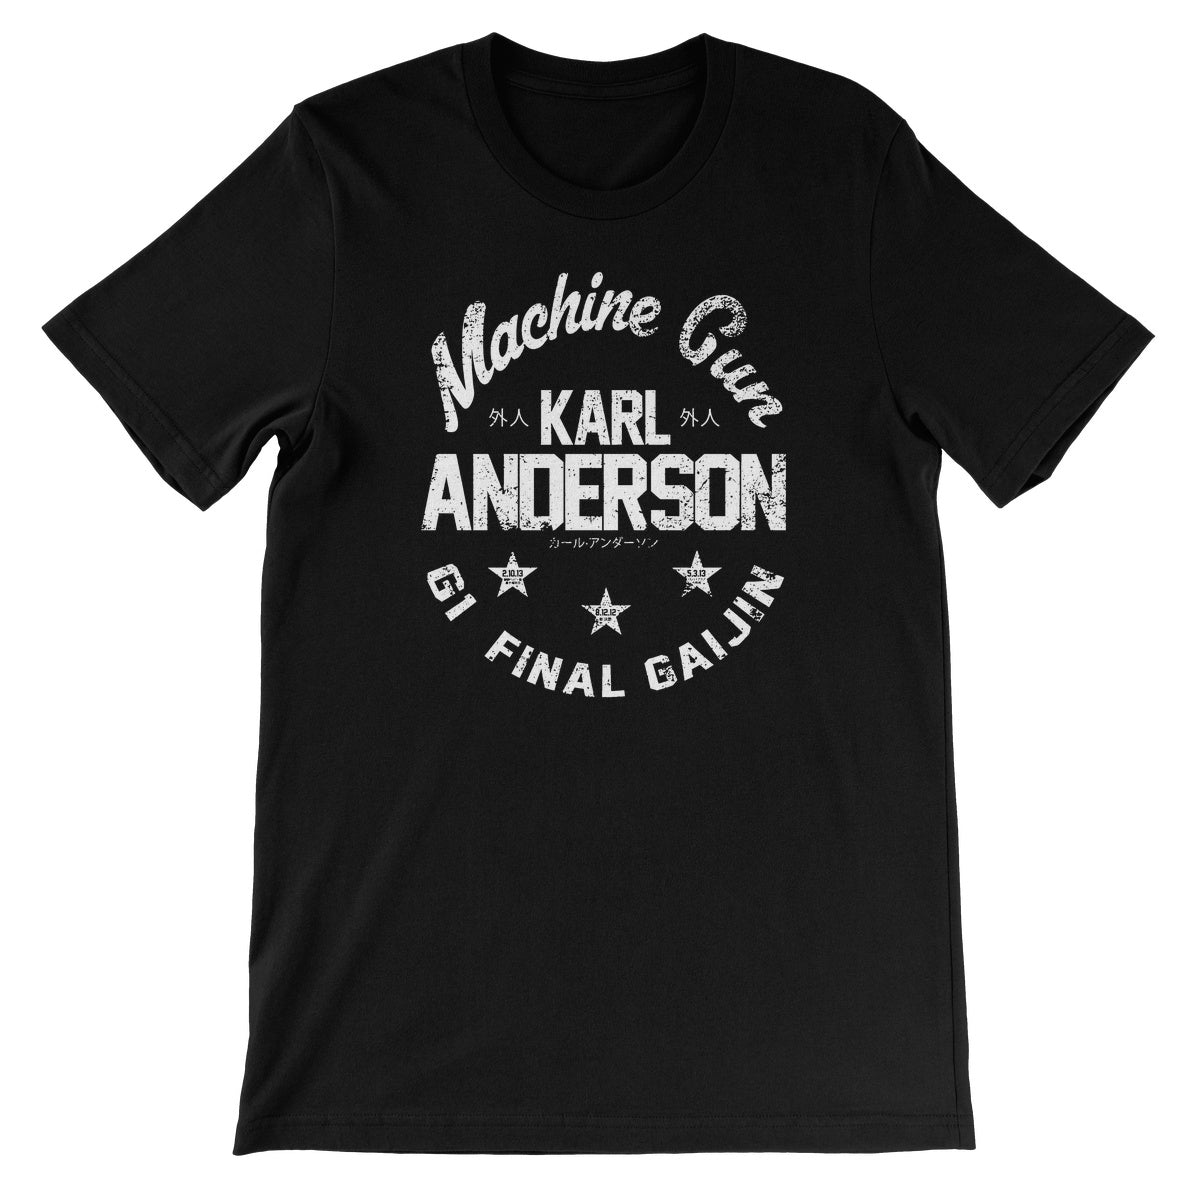 Karl Anderson G1 Final Gaijin Unisex Short Sleeve T-Shirt